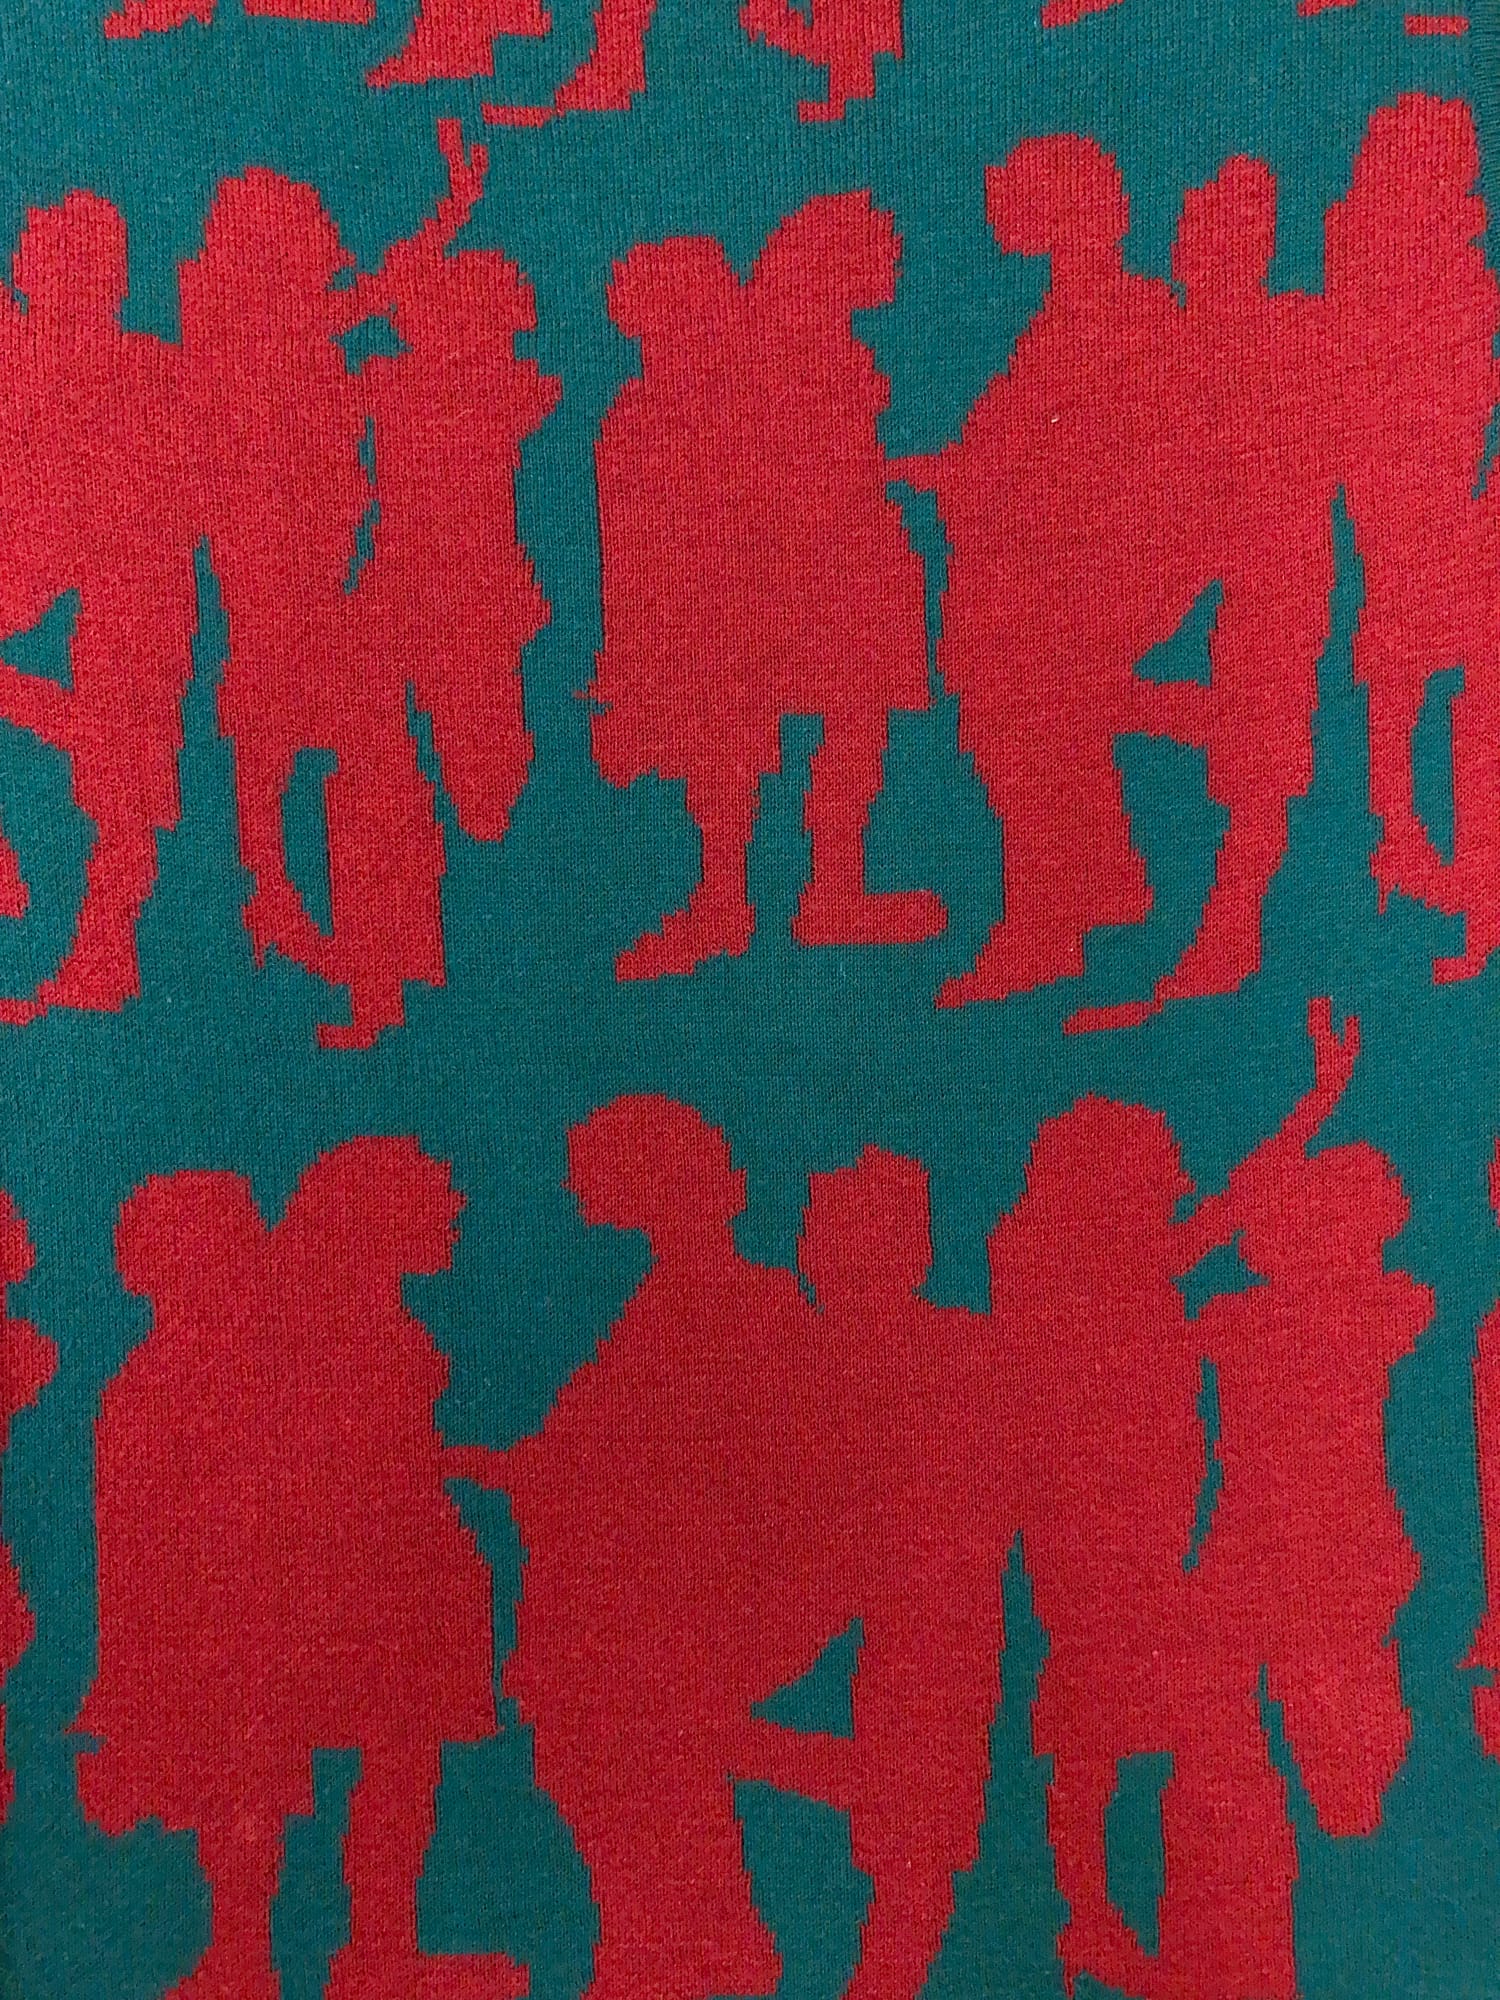 Jocomomola de Sybilla green knitted cotton vest with red dancing figures